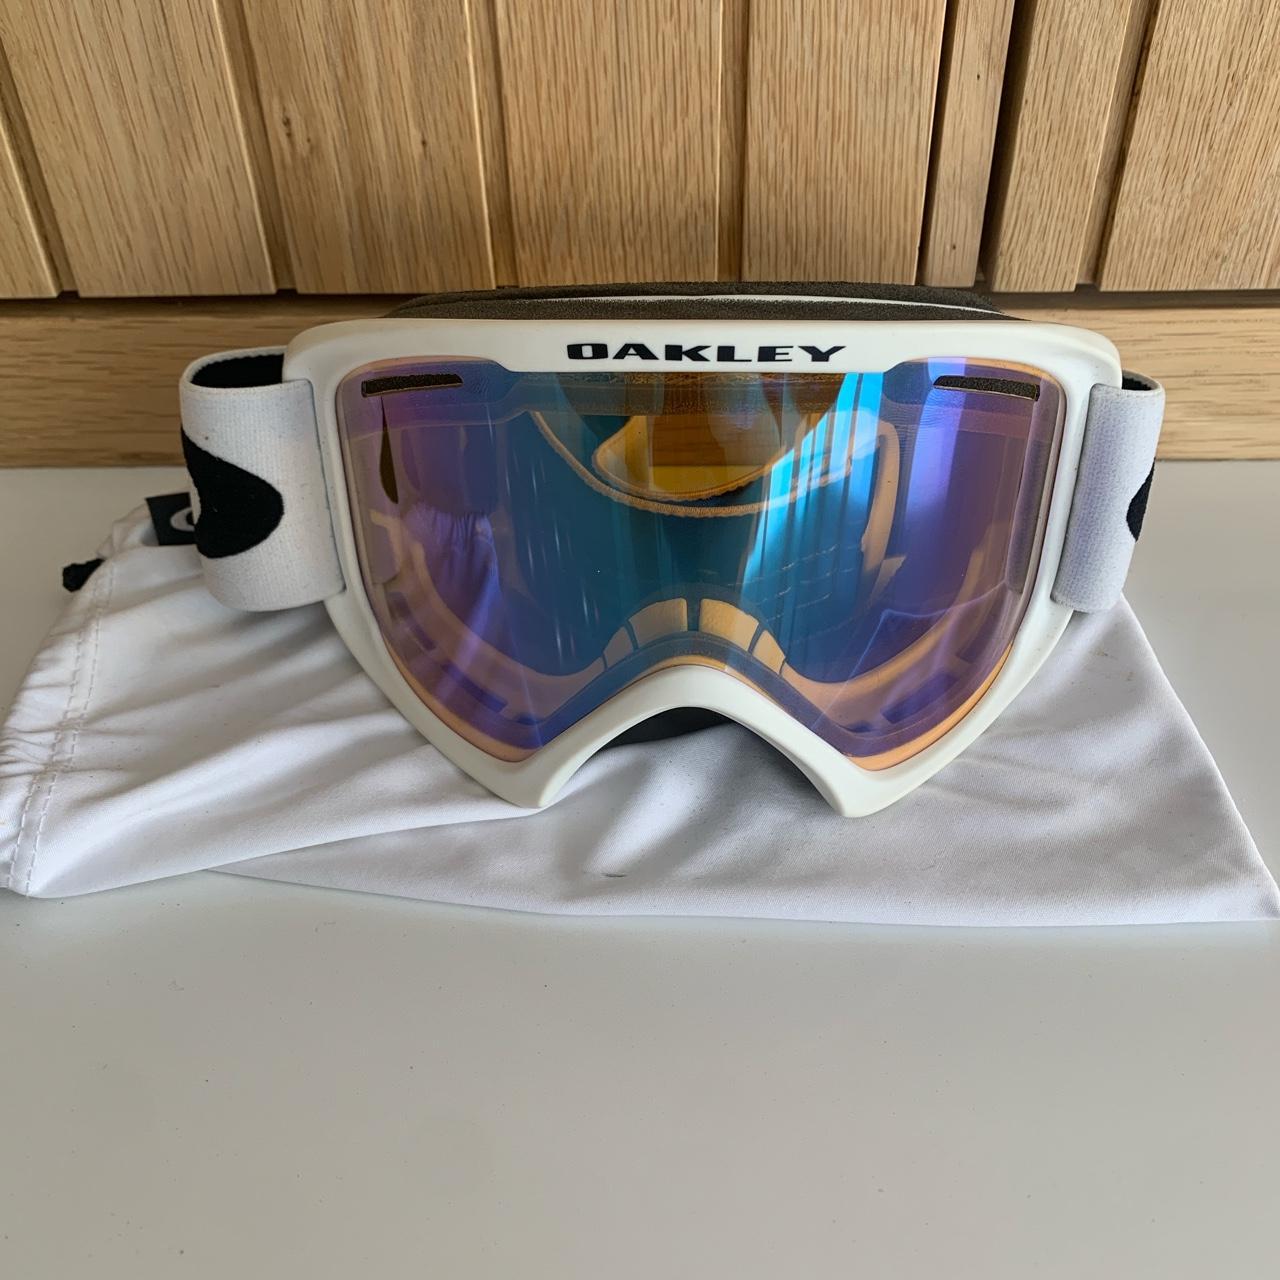 Oakley ski-goggles - Depop